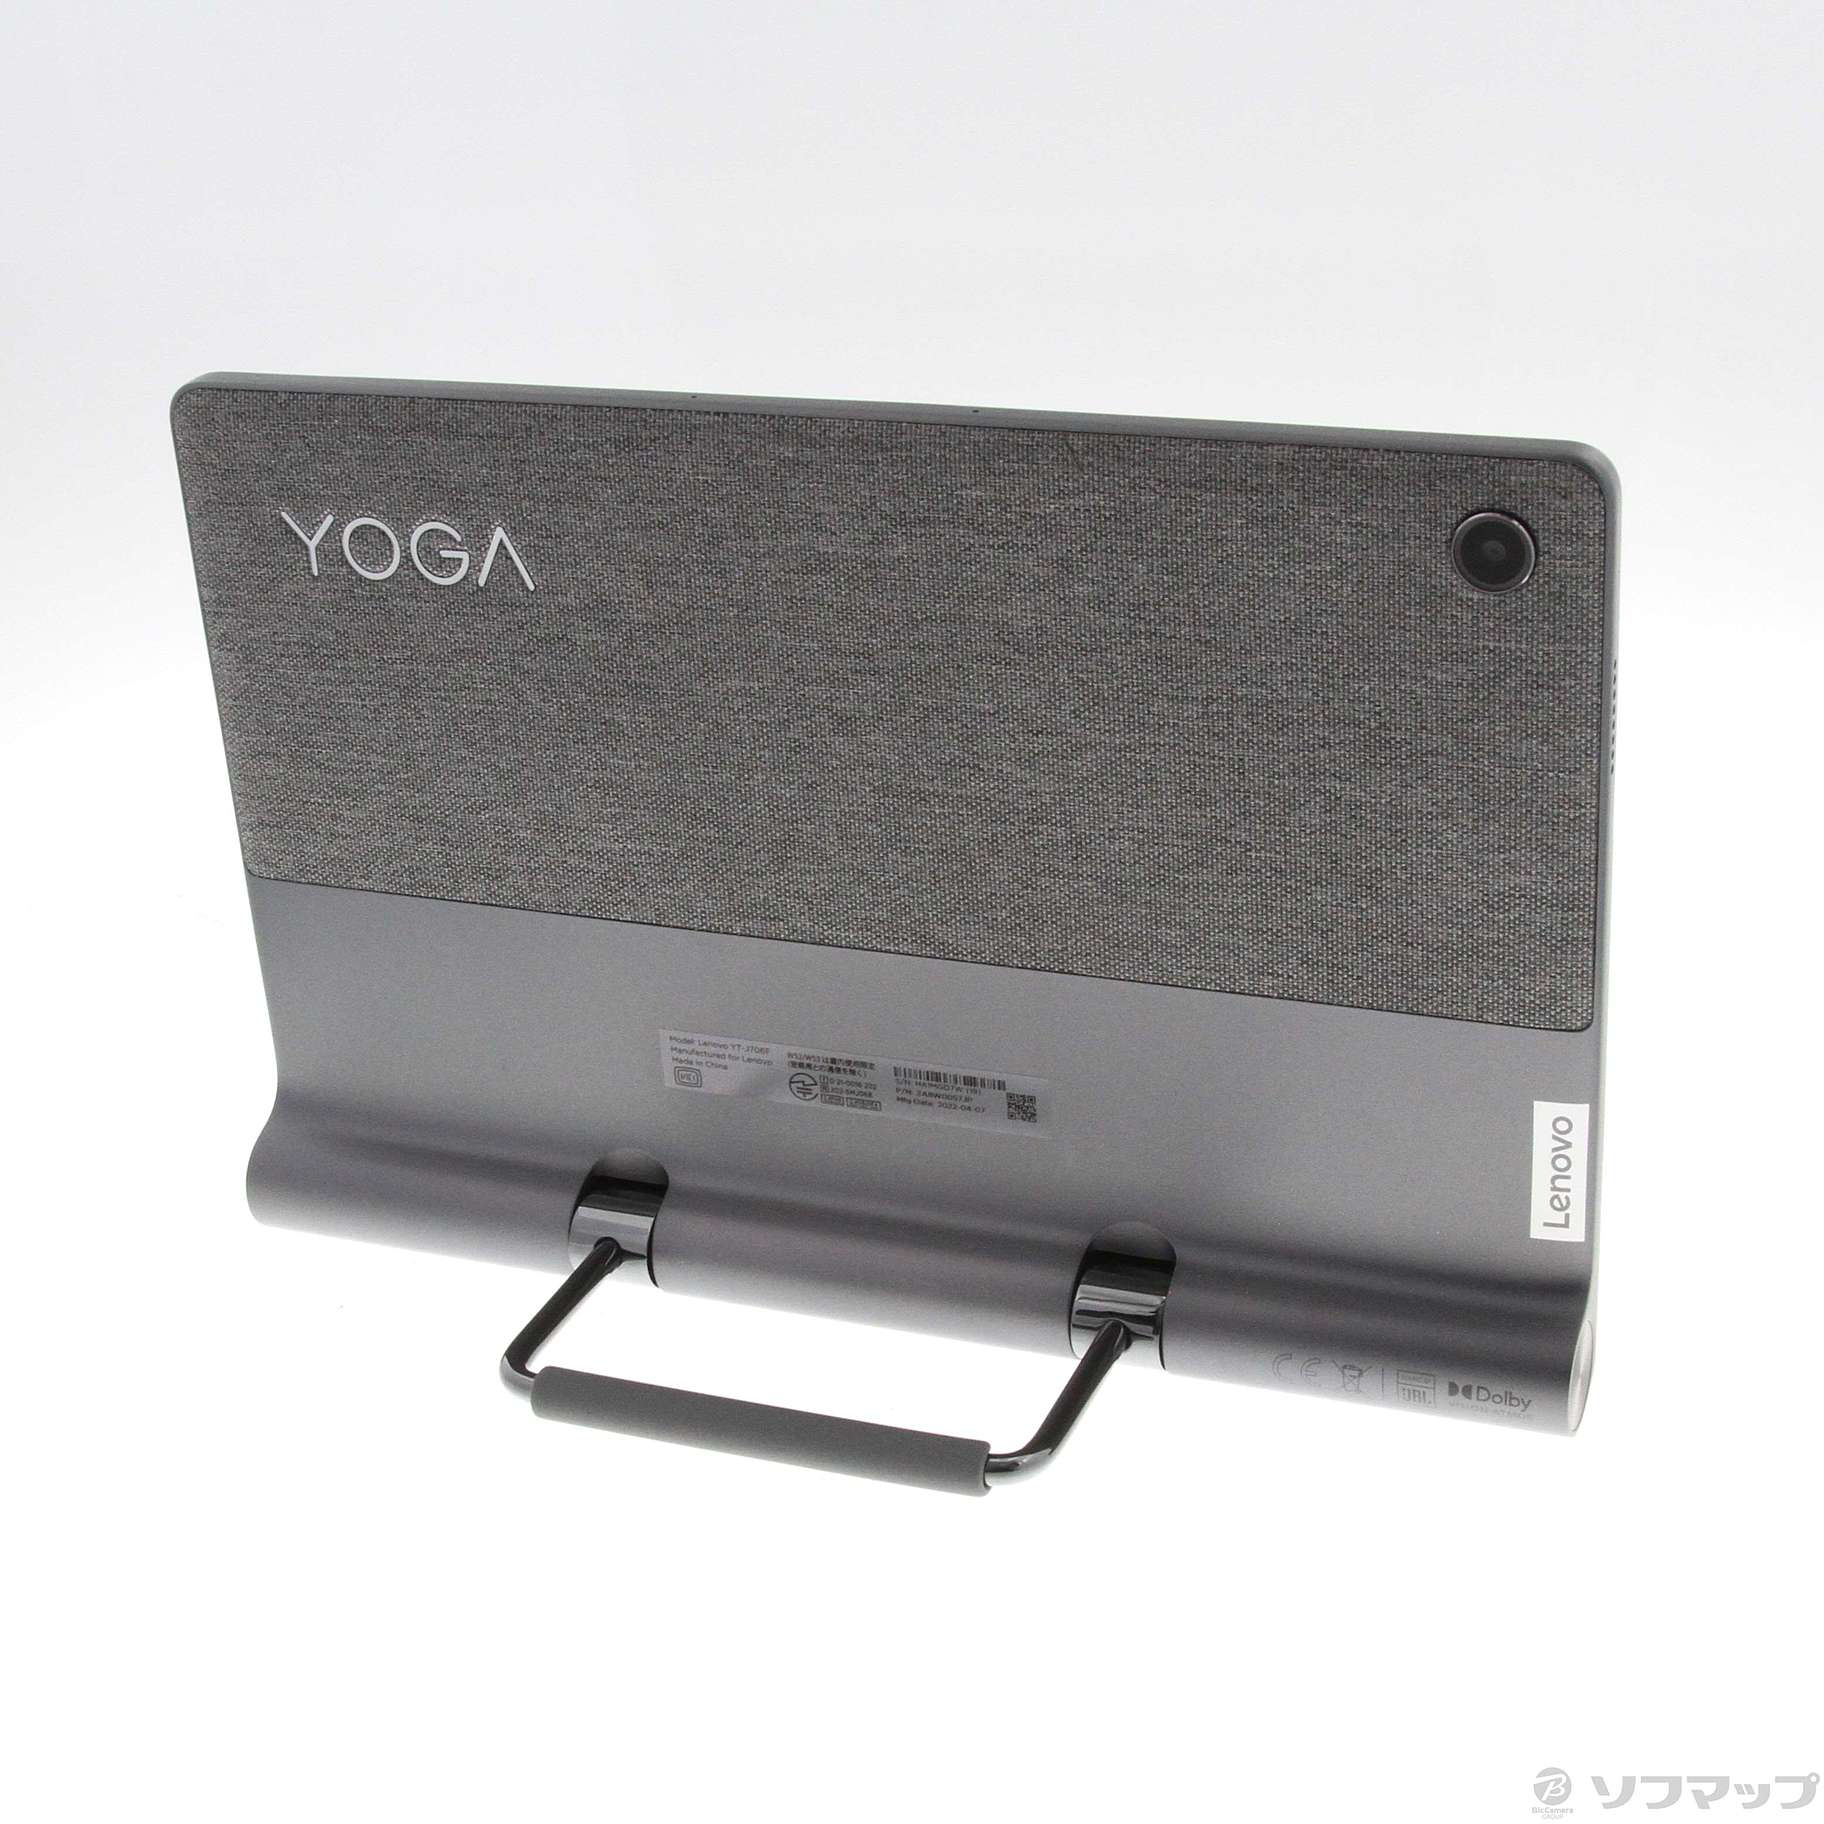 Lenovo Yoga Tab 11 ストームグレー ZA8W0057JP